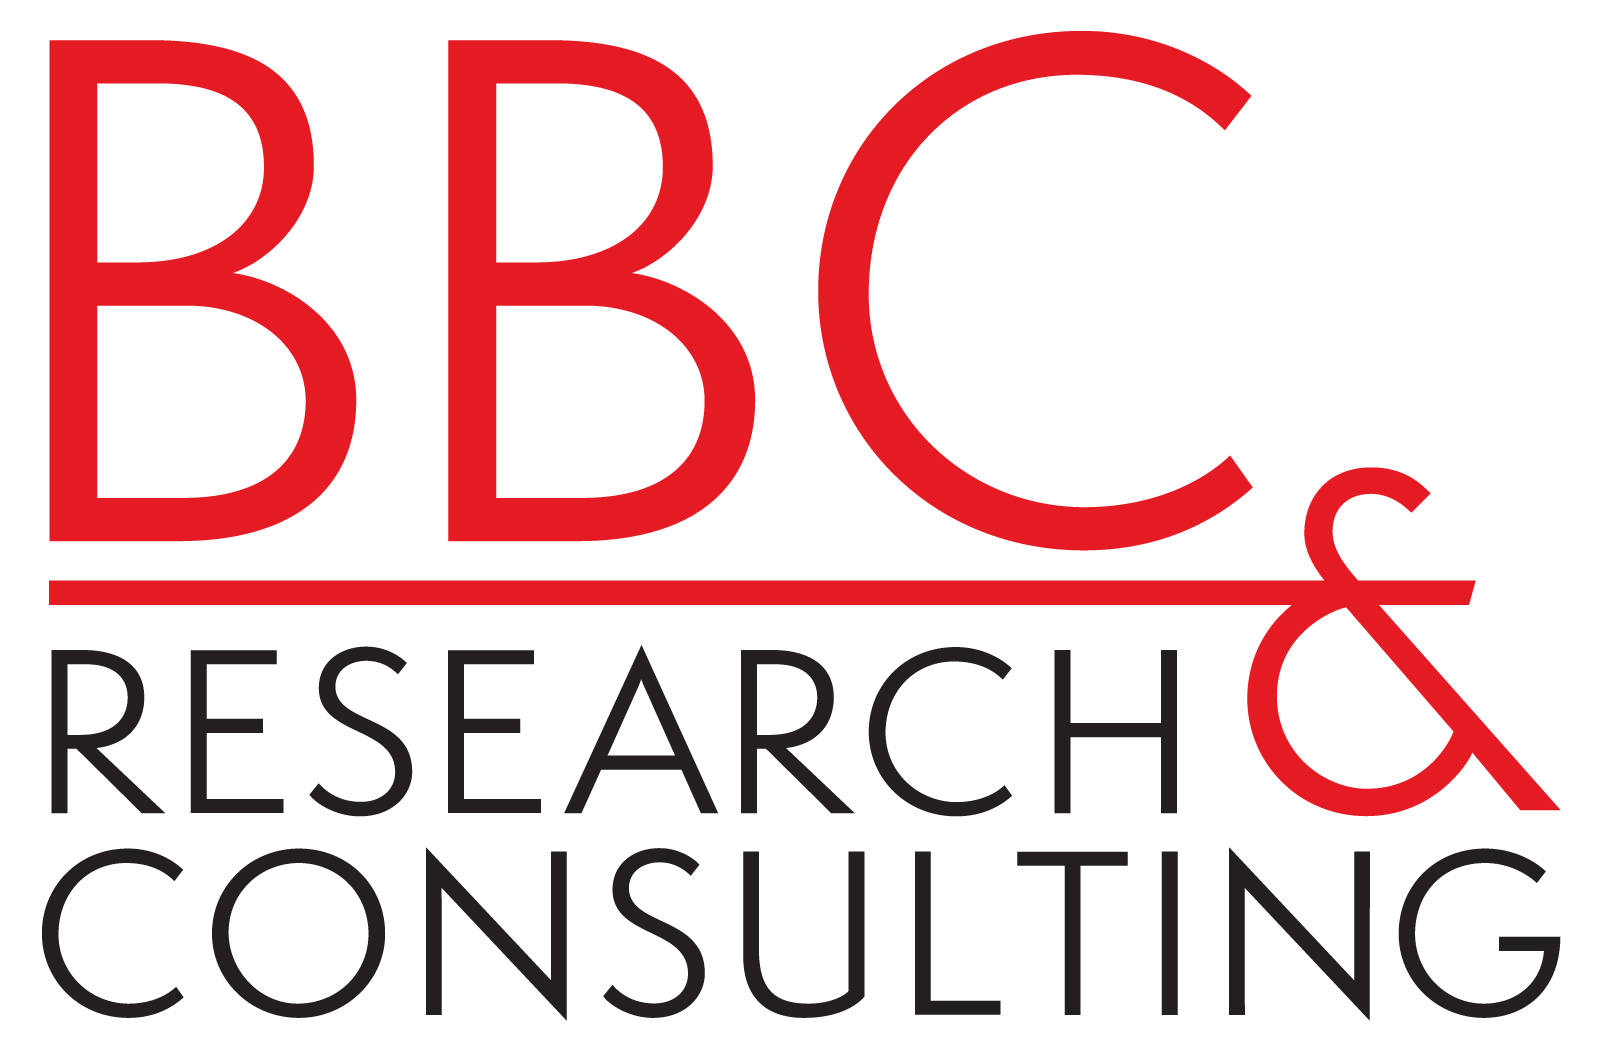 bbc-logo-pms-1797-blk-lrg.jpg